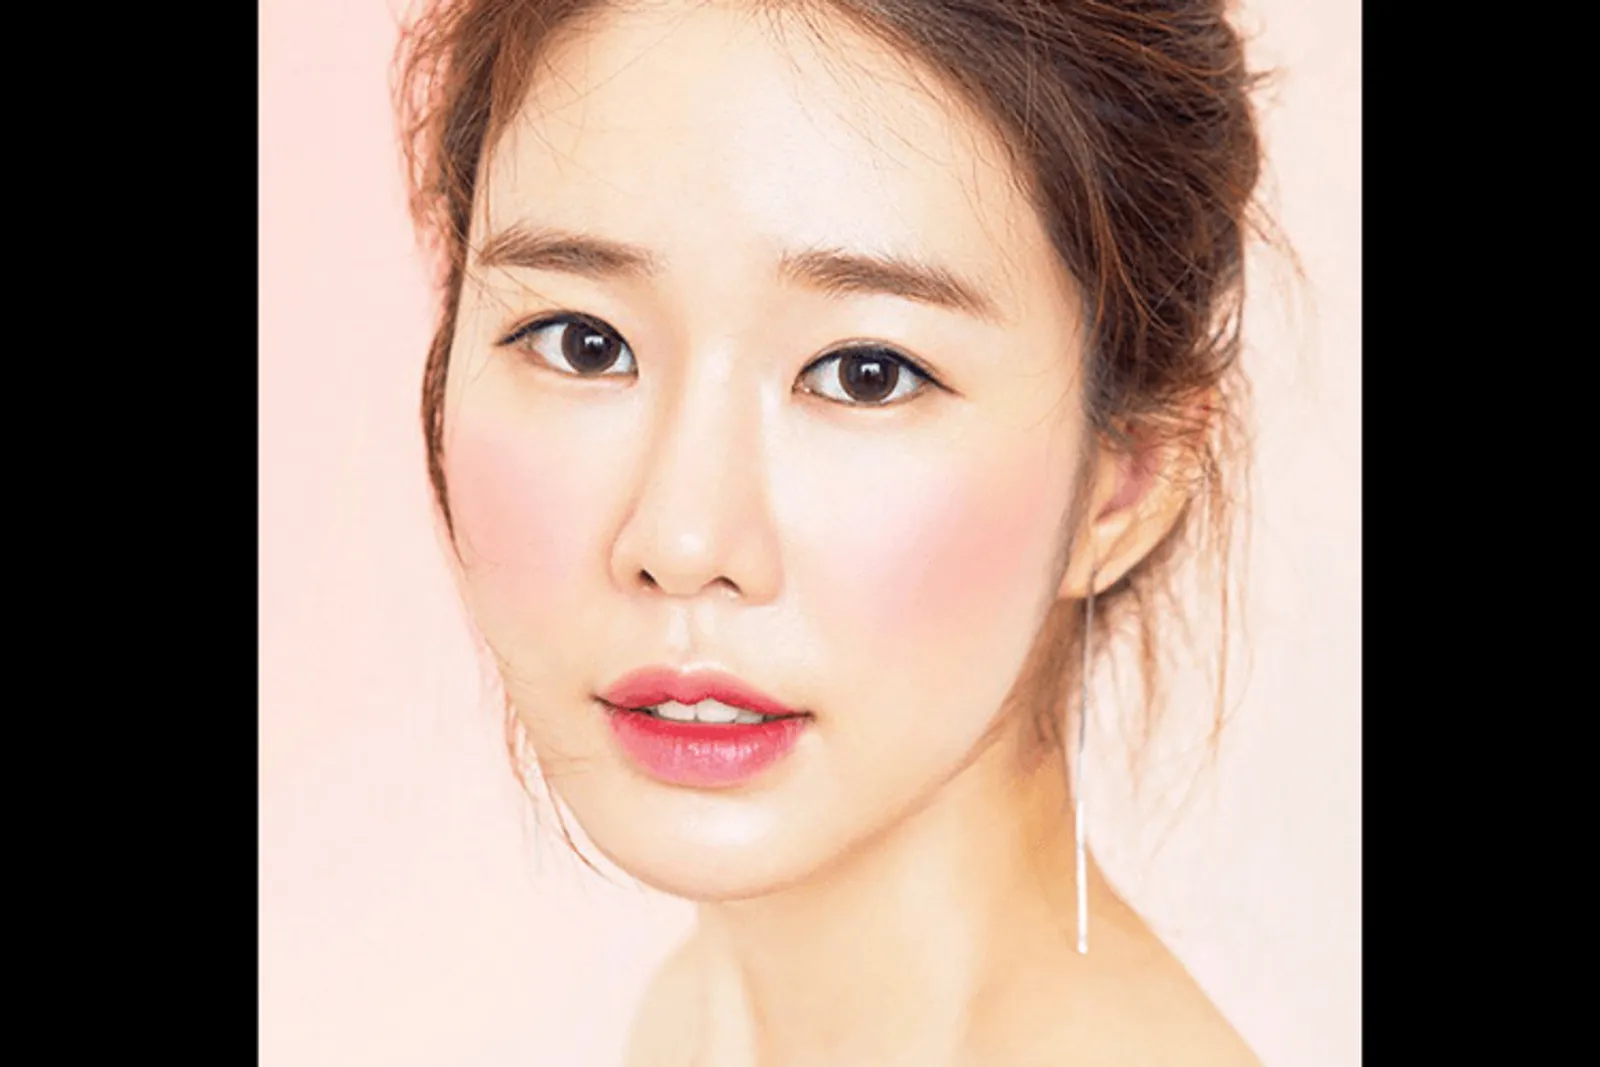 Intip 7 Potret Memesona Yoo In Na, Pemeran Drama Touch Your Heart